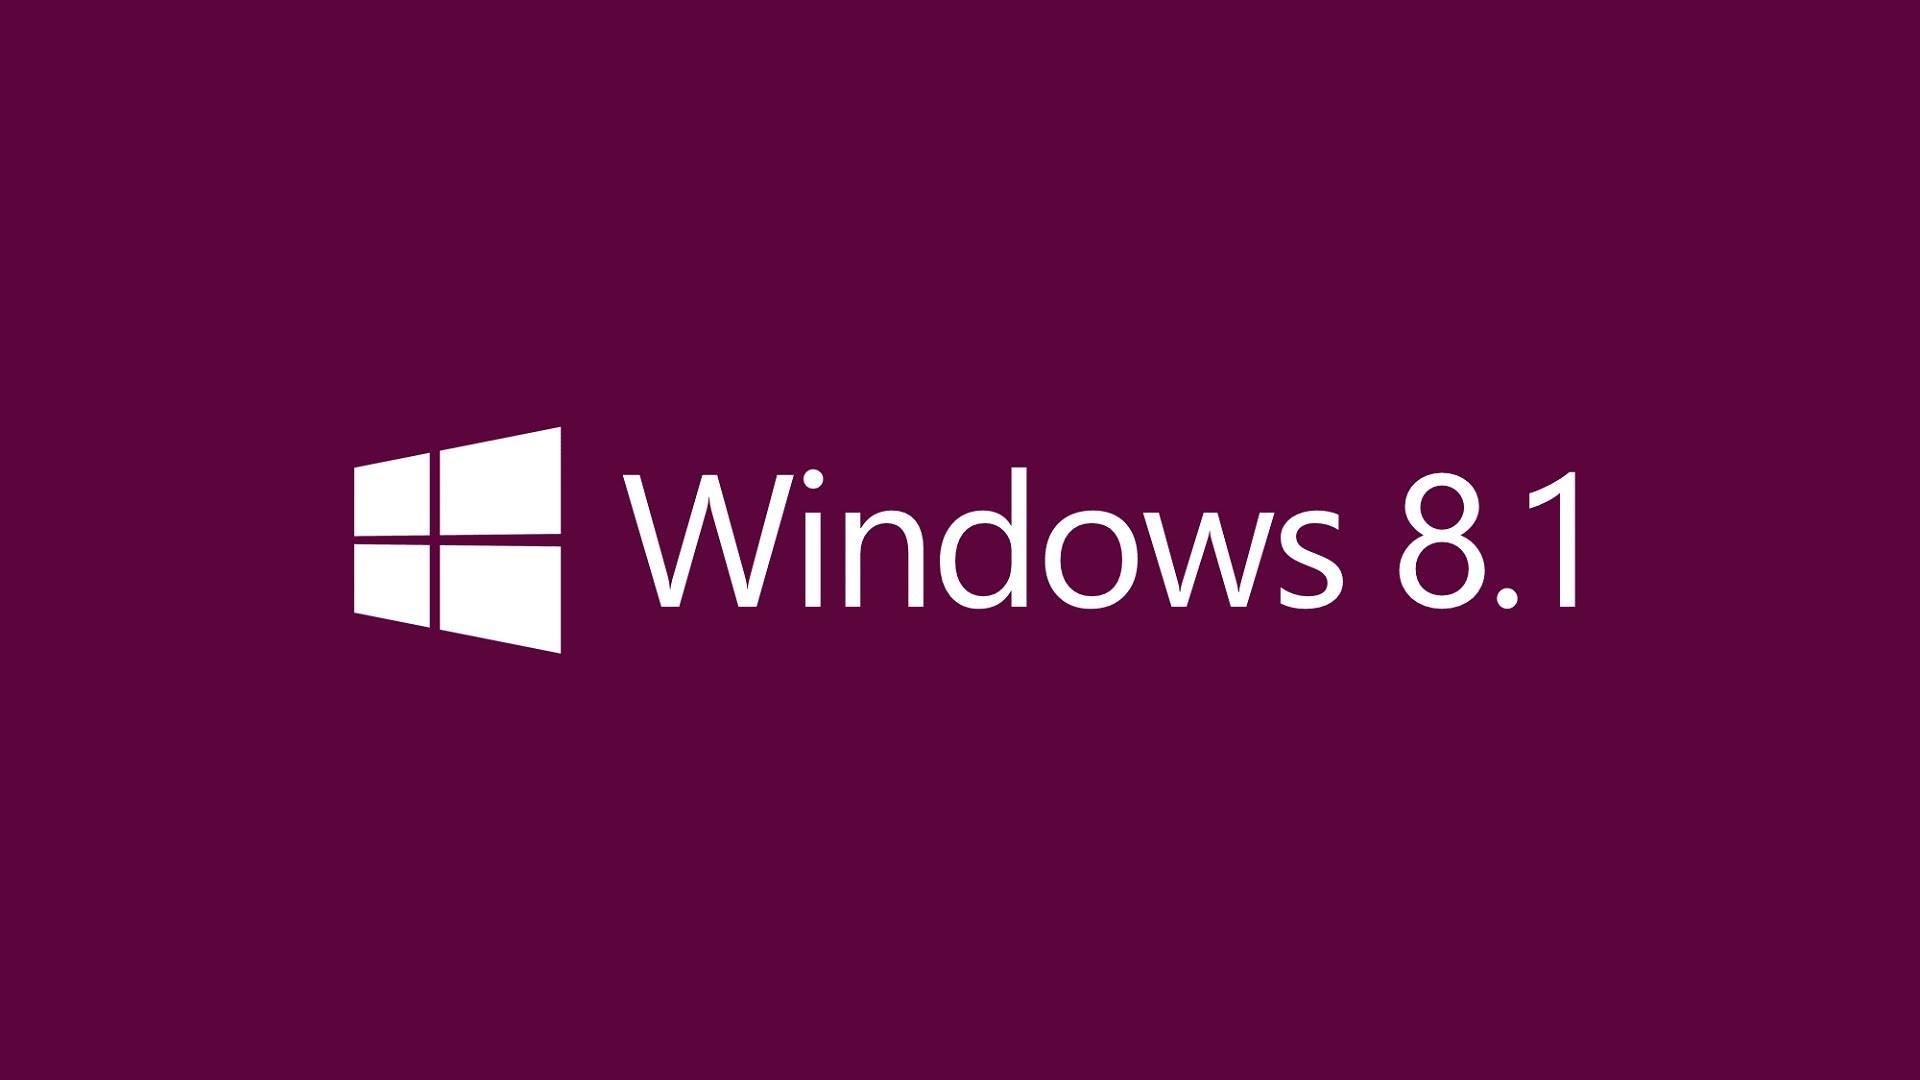 Windows 8.1 HD Wallpapers